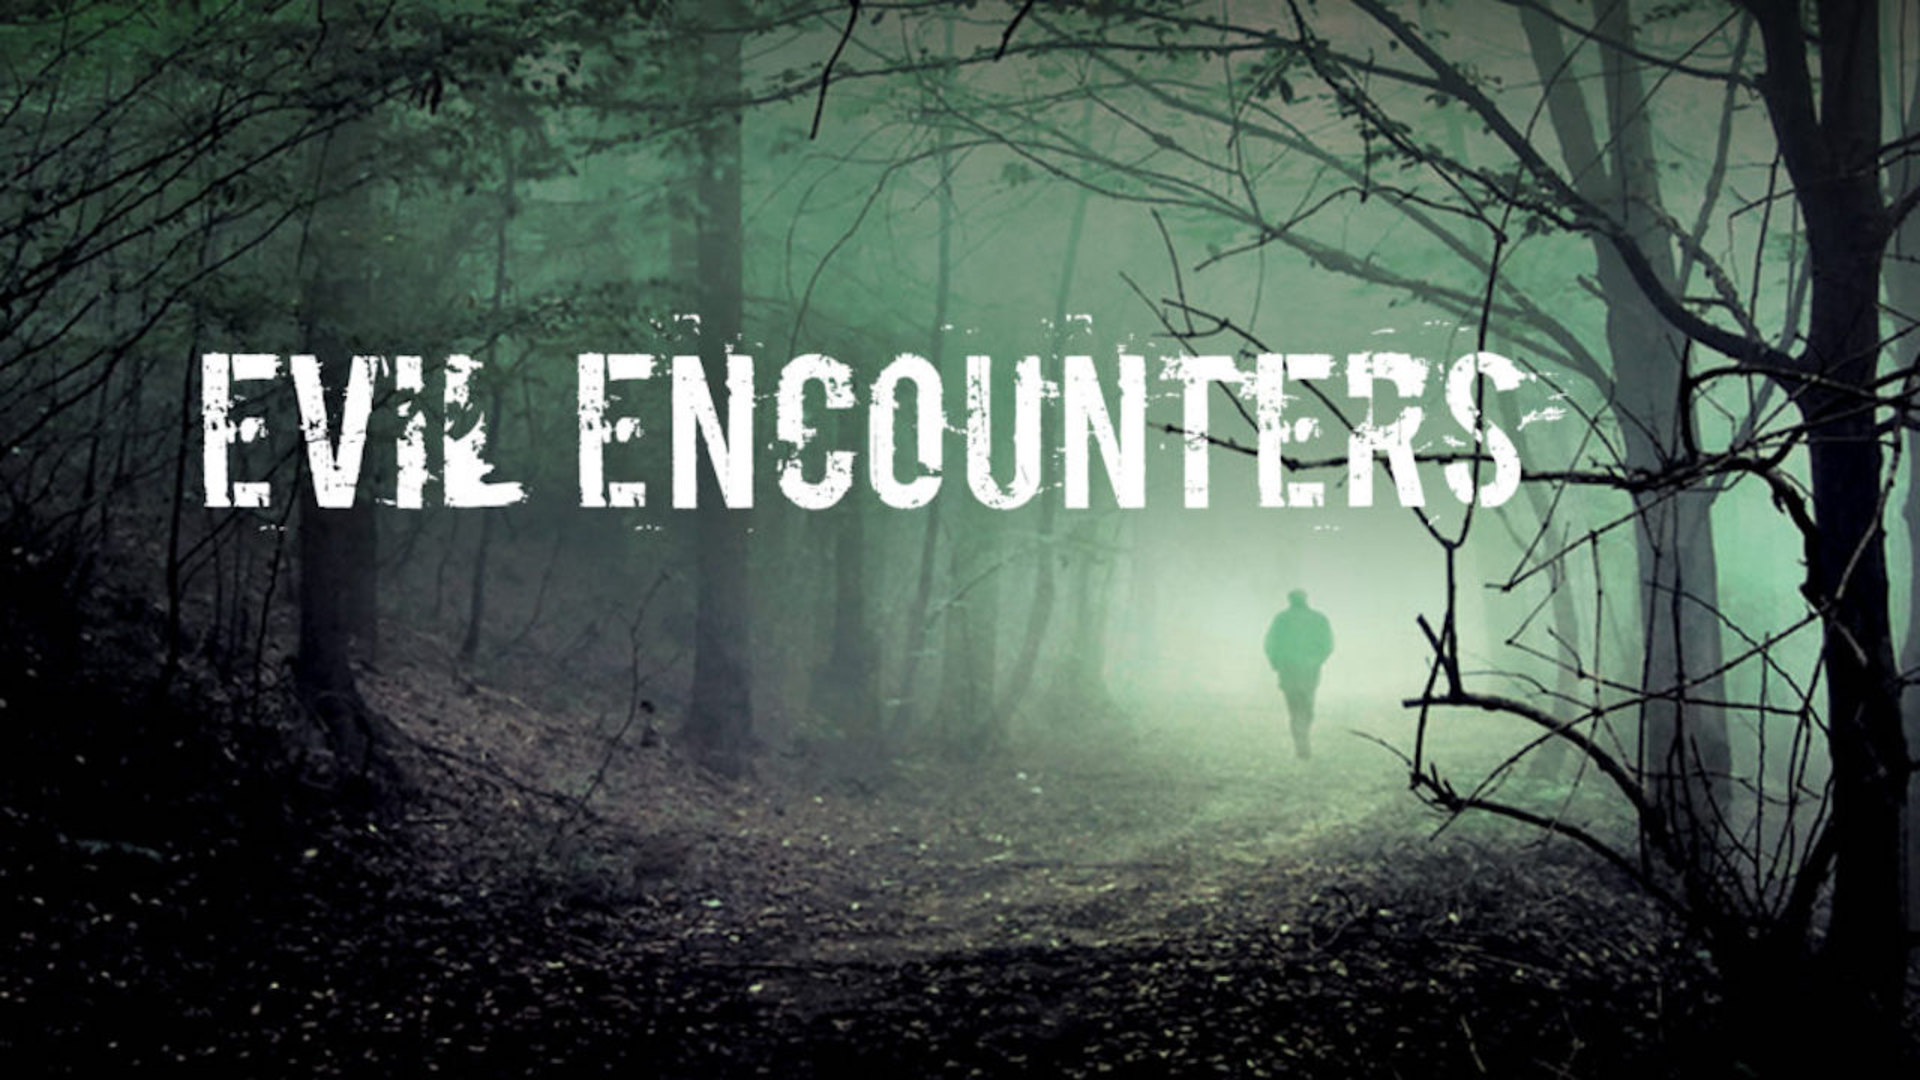 Evil Encounters (TV Series 2017)